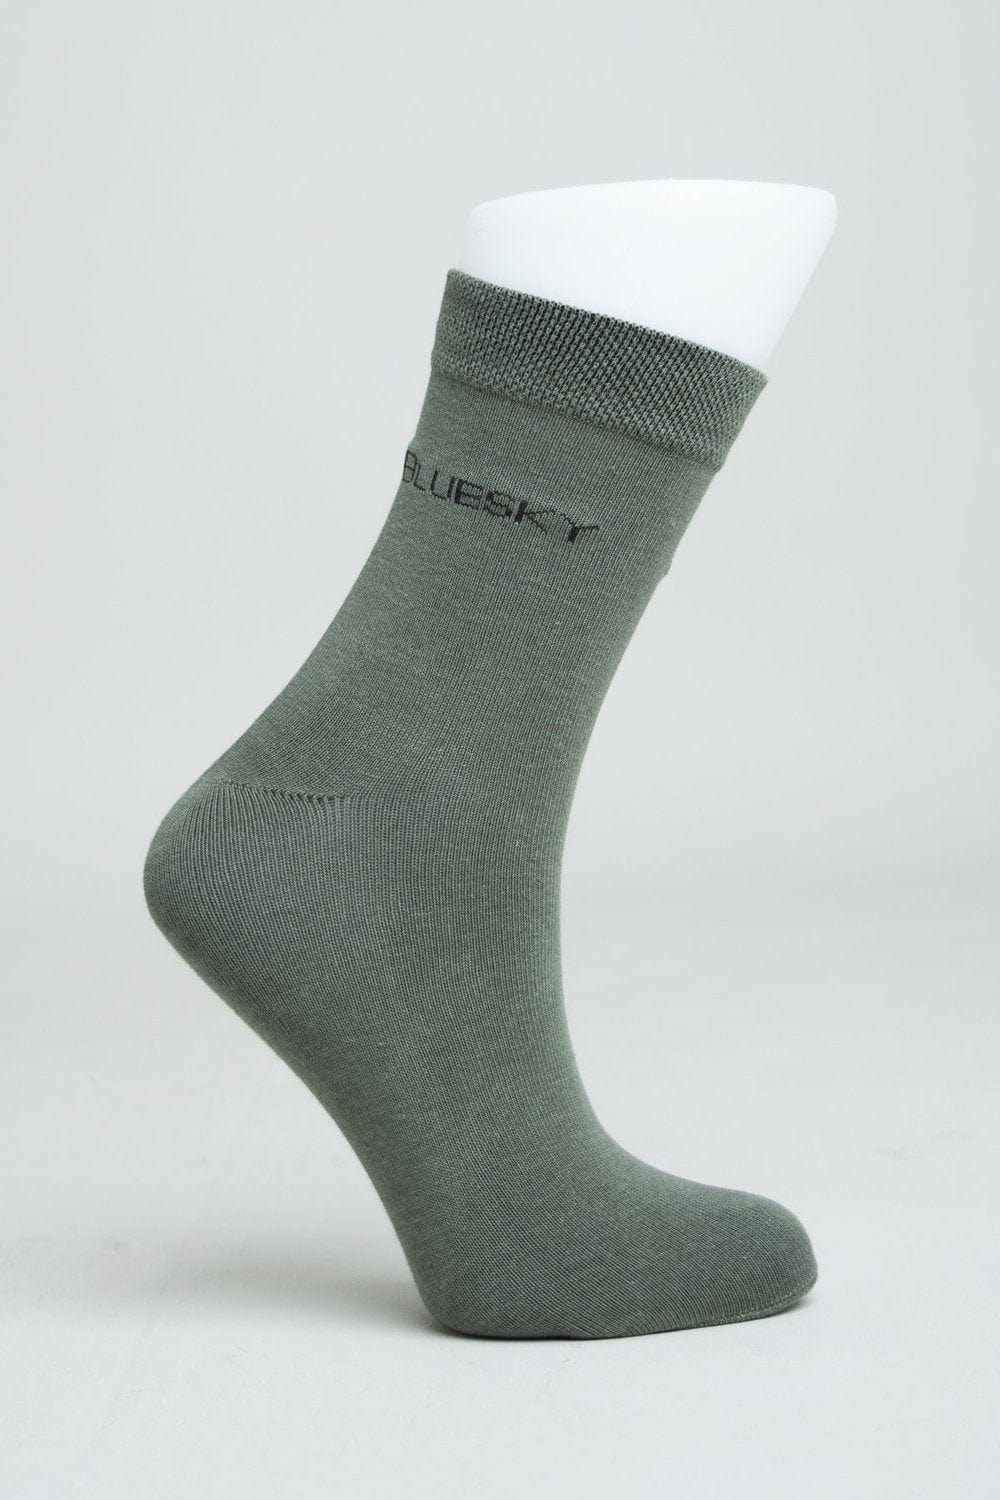 Blue Sky women's socks Denim / M Women's Dress Socks - viscose of Bamboo